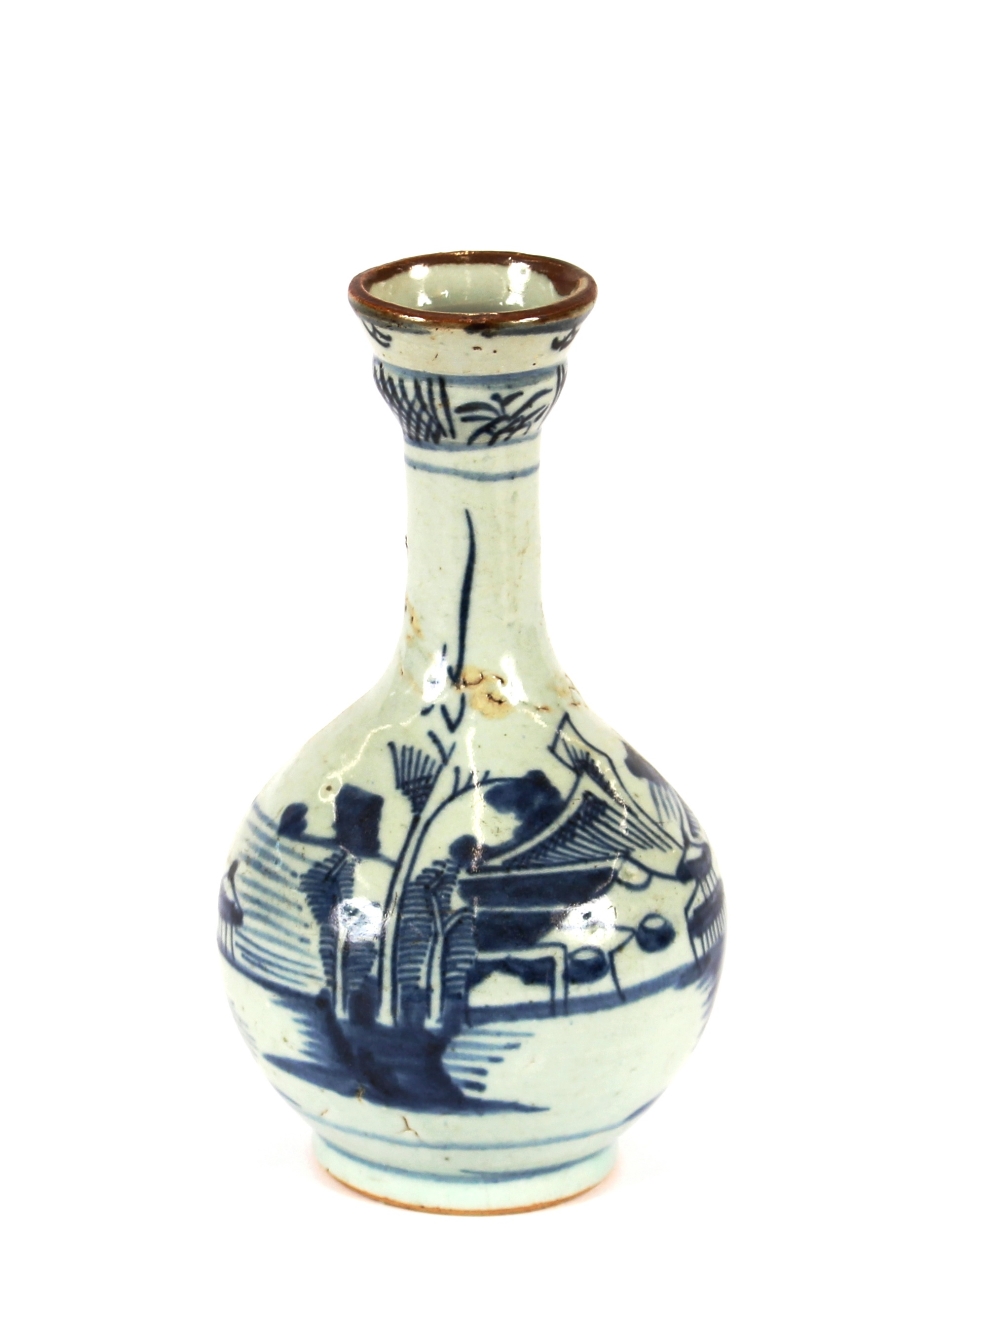 An 18th Century Chinese porcelain bottle vase, 23cm high